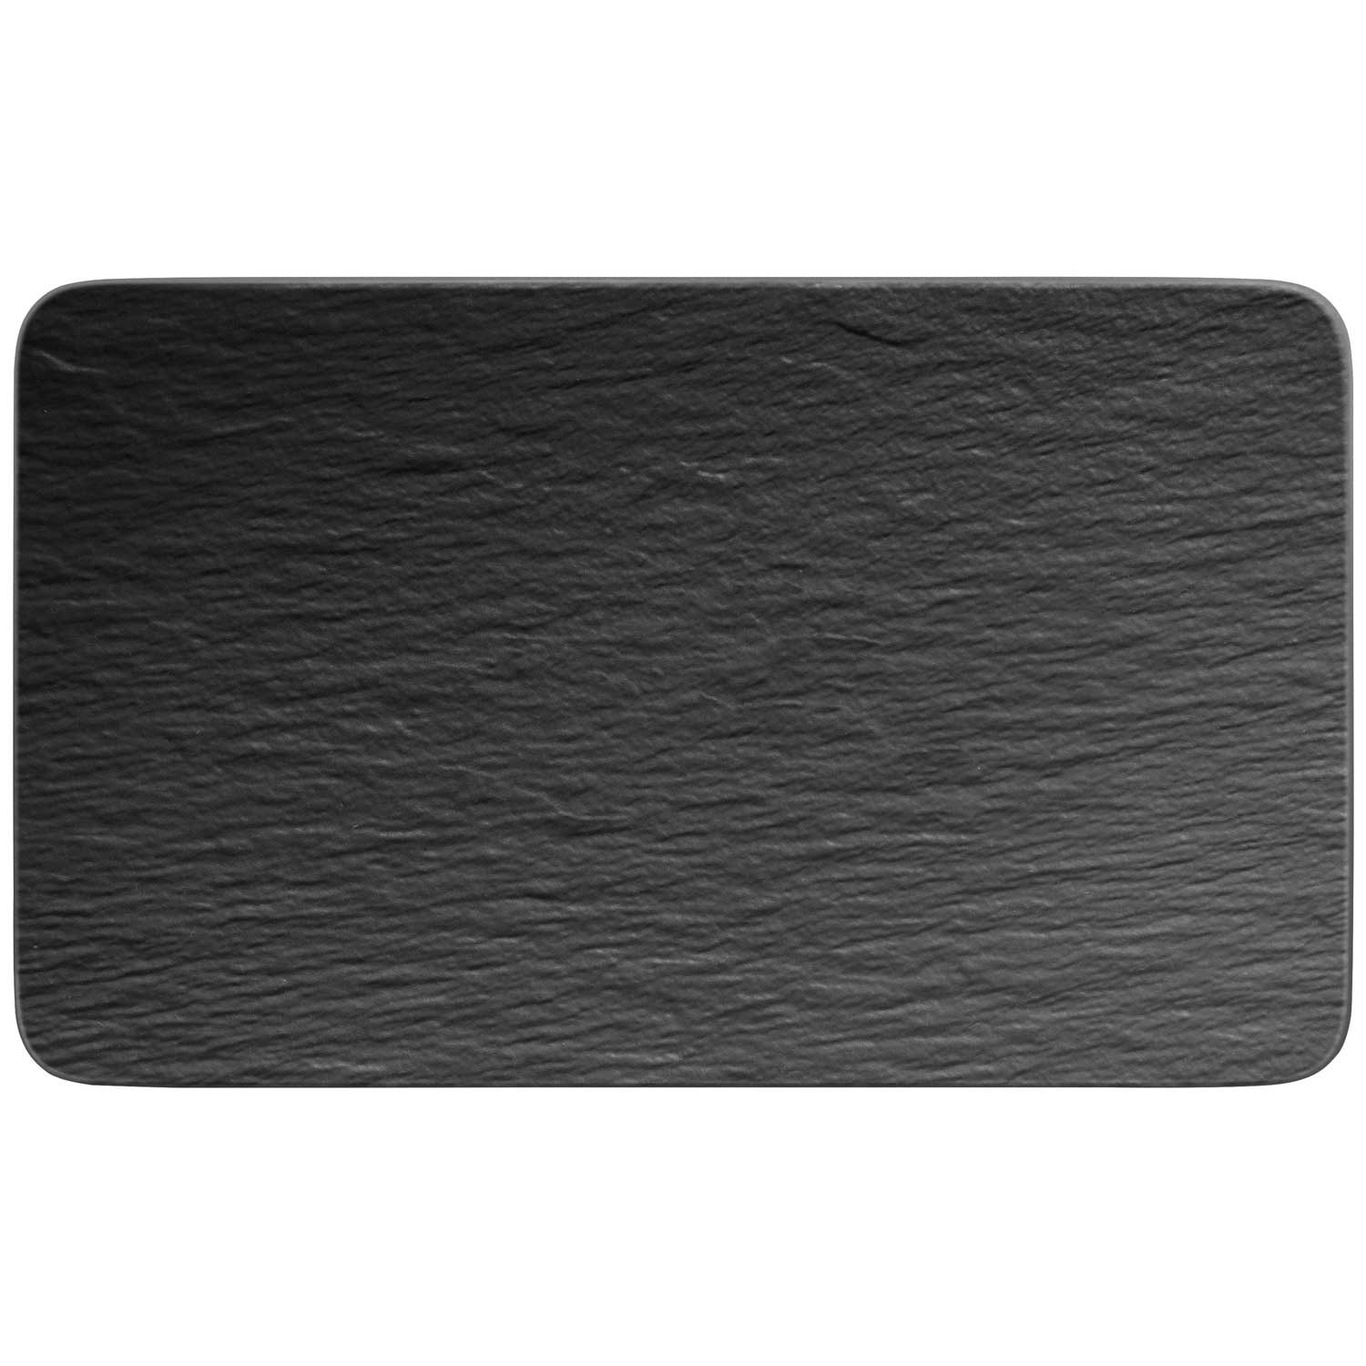 Manufacture Rock Serving Plate, Black 28 cm